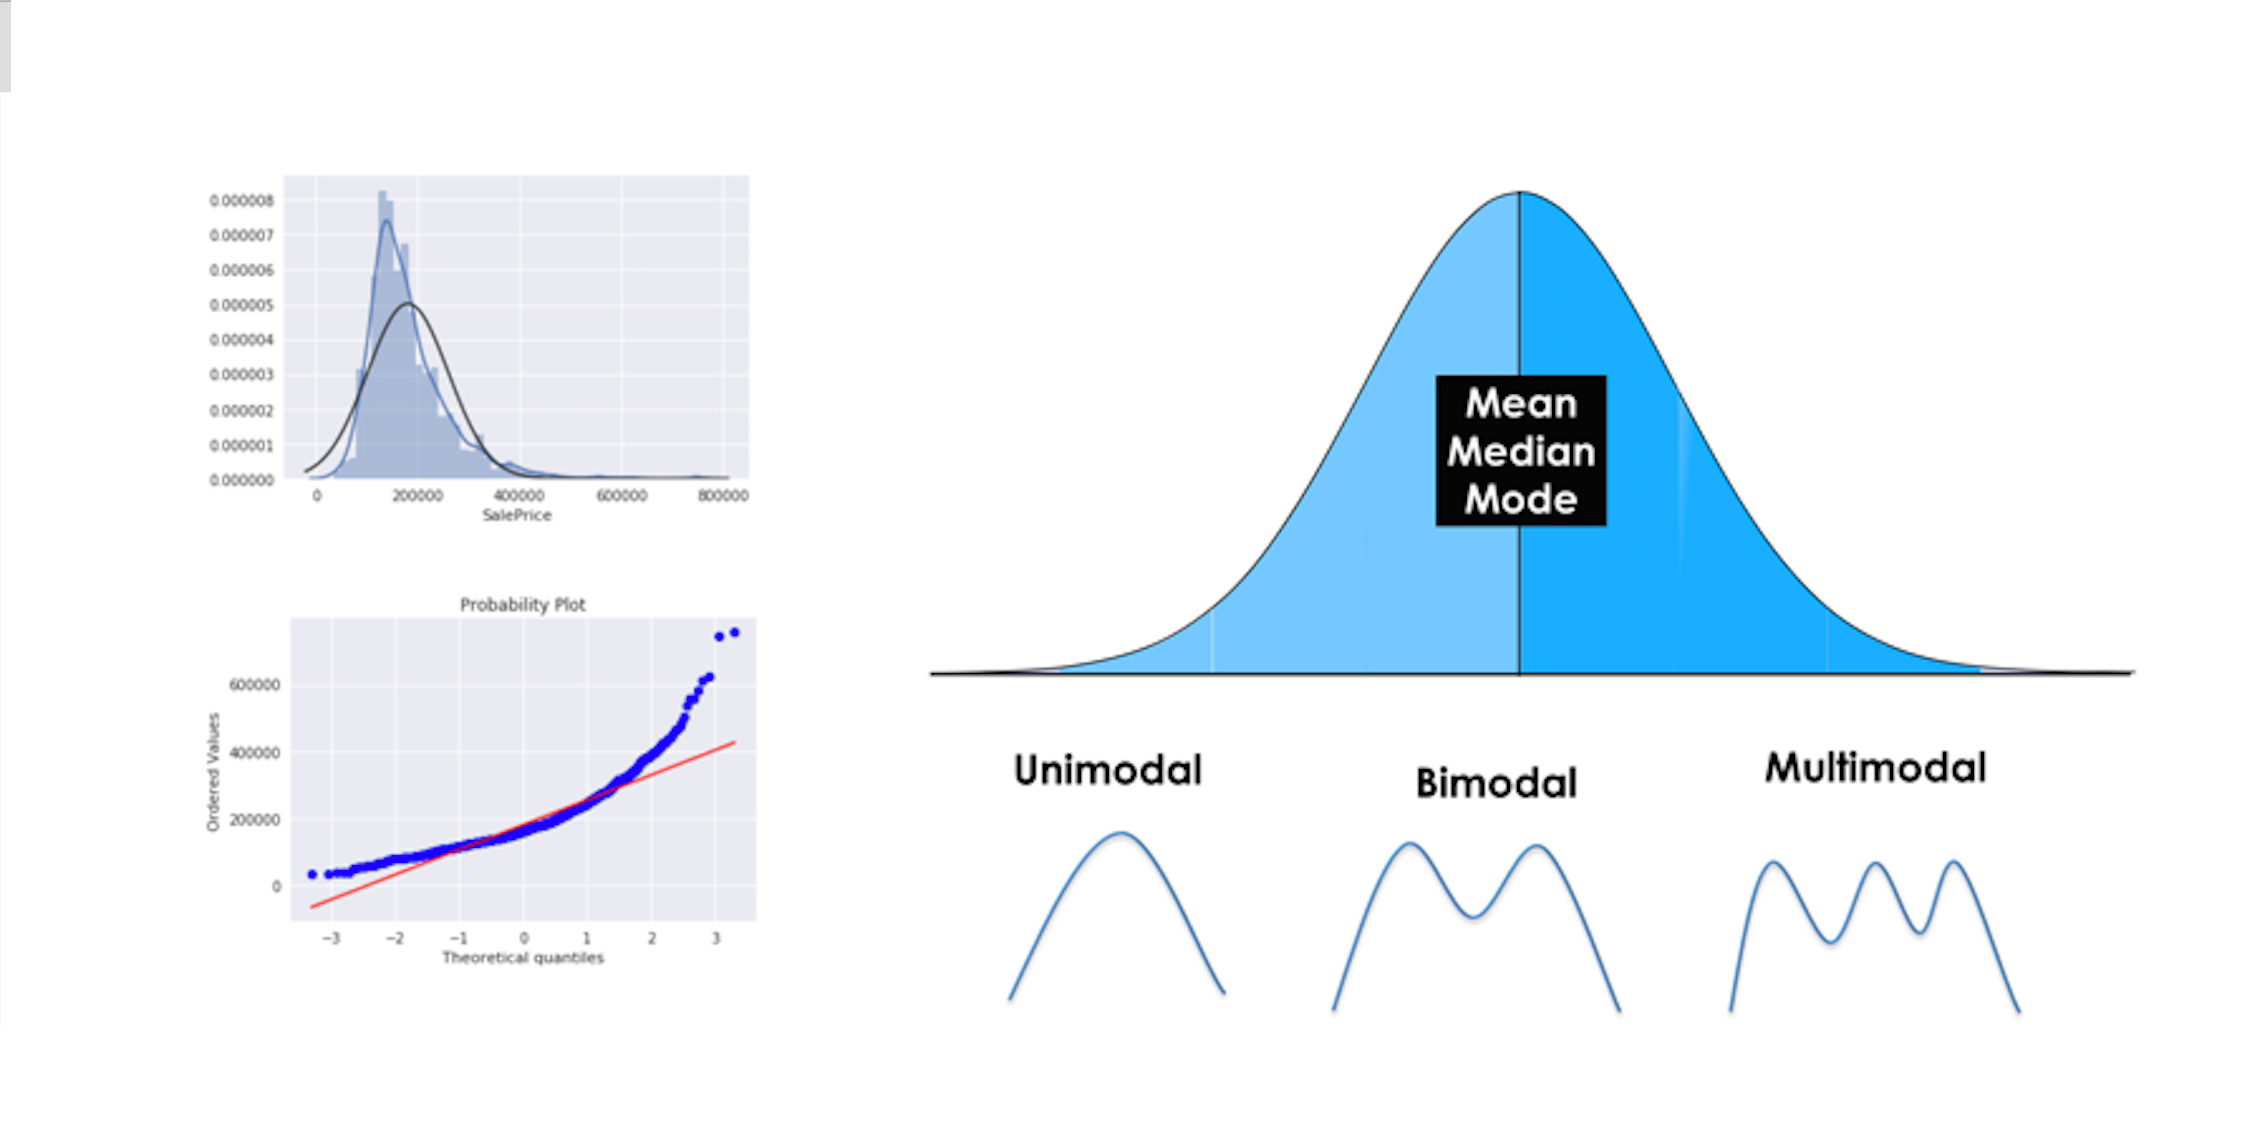 Normal Distribution Chart Maker